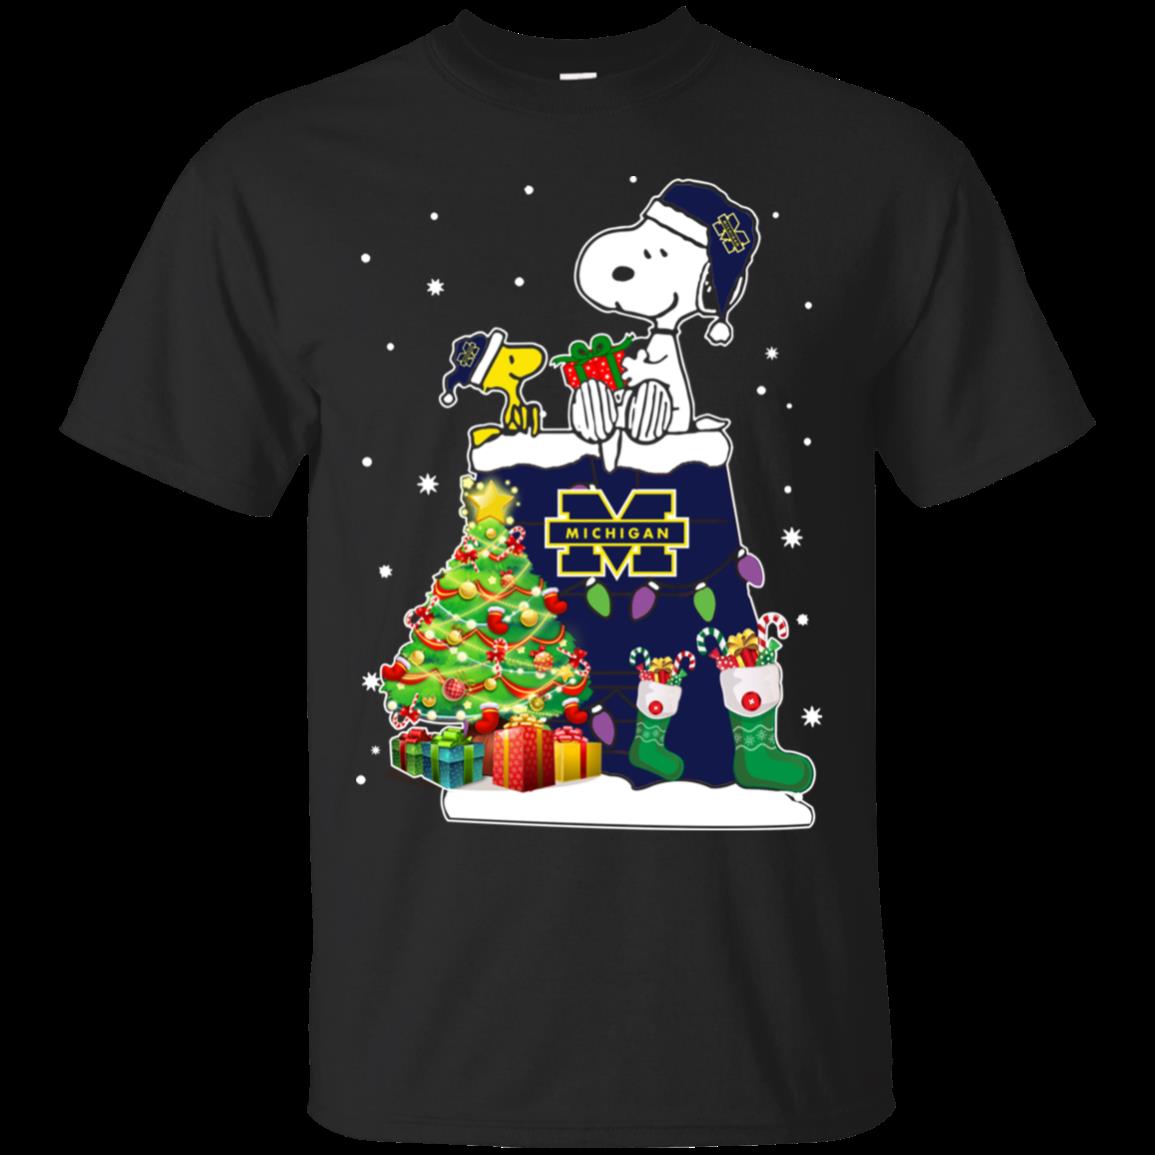 Michigan Wolverines Snoopy & Woodstock Christmas Shirt Cotton Shirt